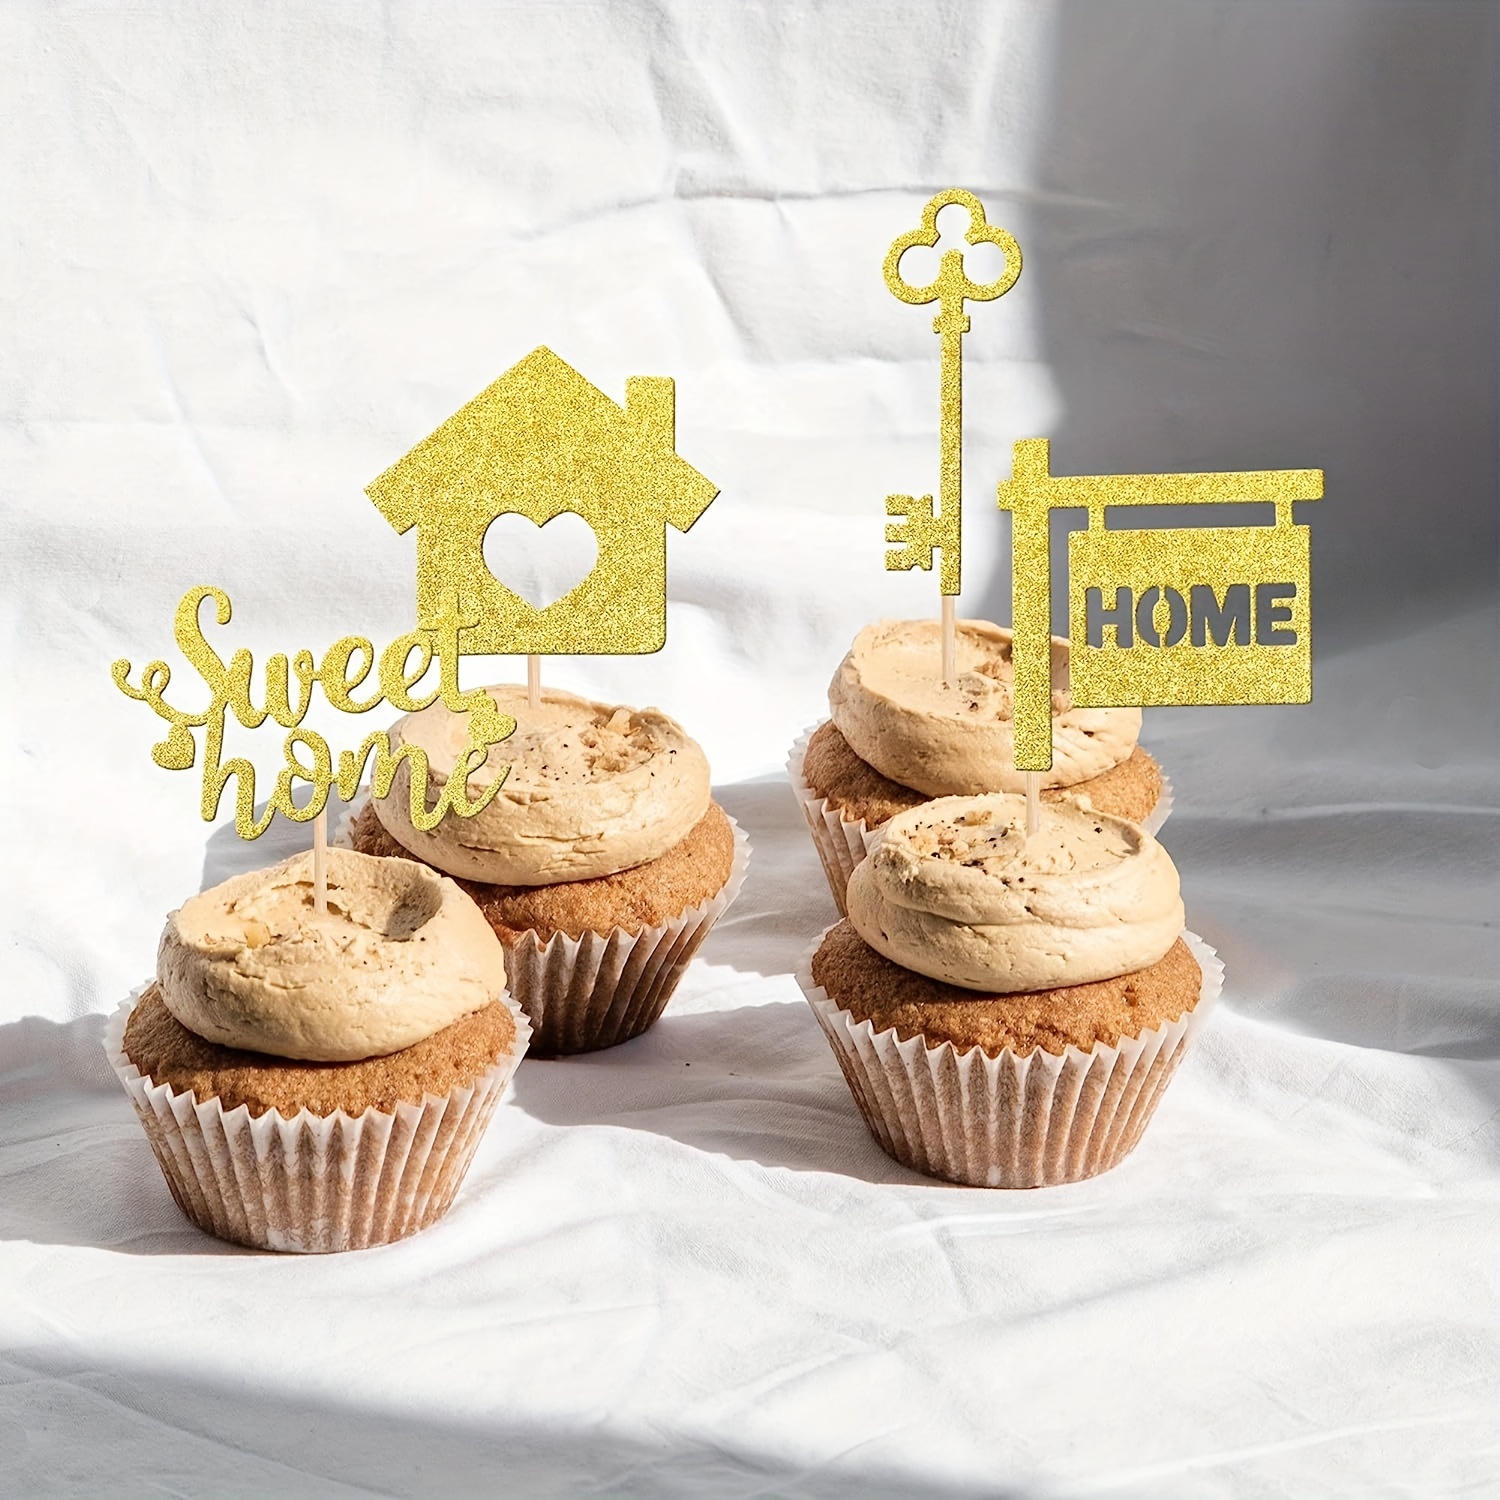 Housewarming Cake is “Home Sweet Home” | A Creative Mom!